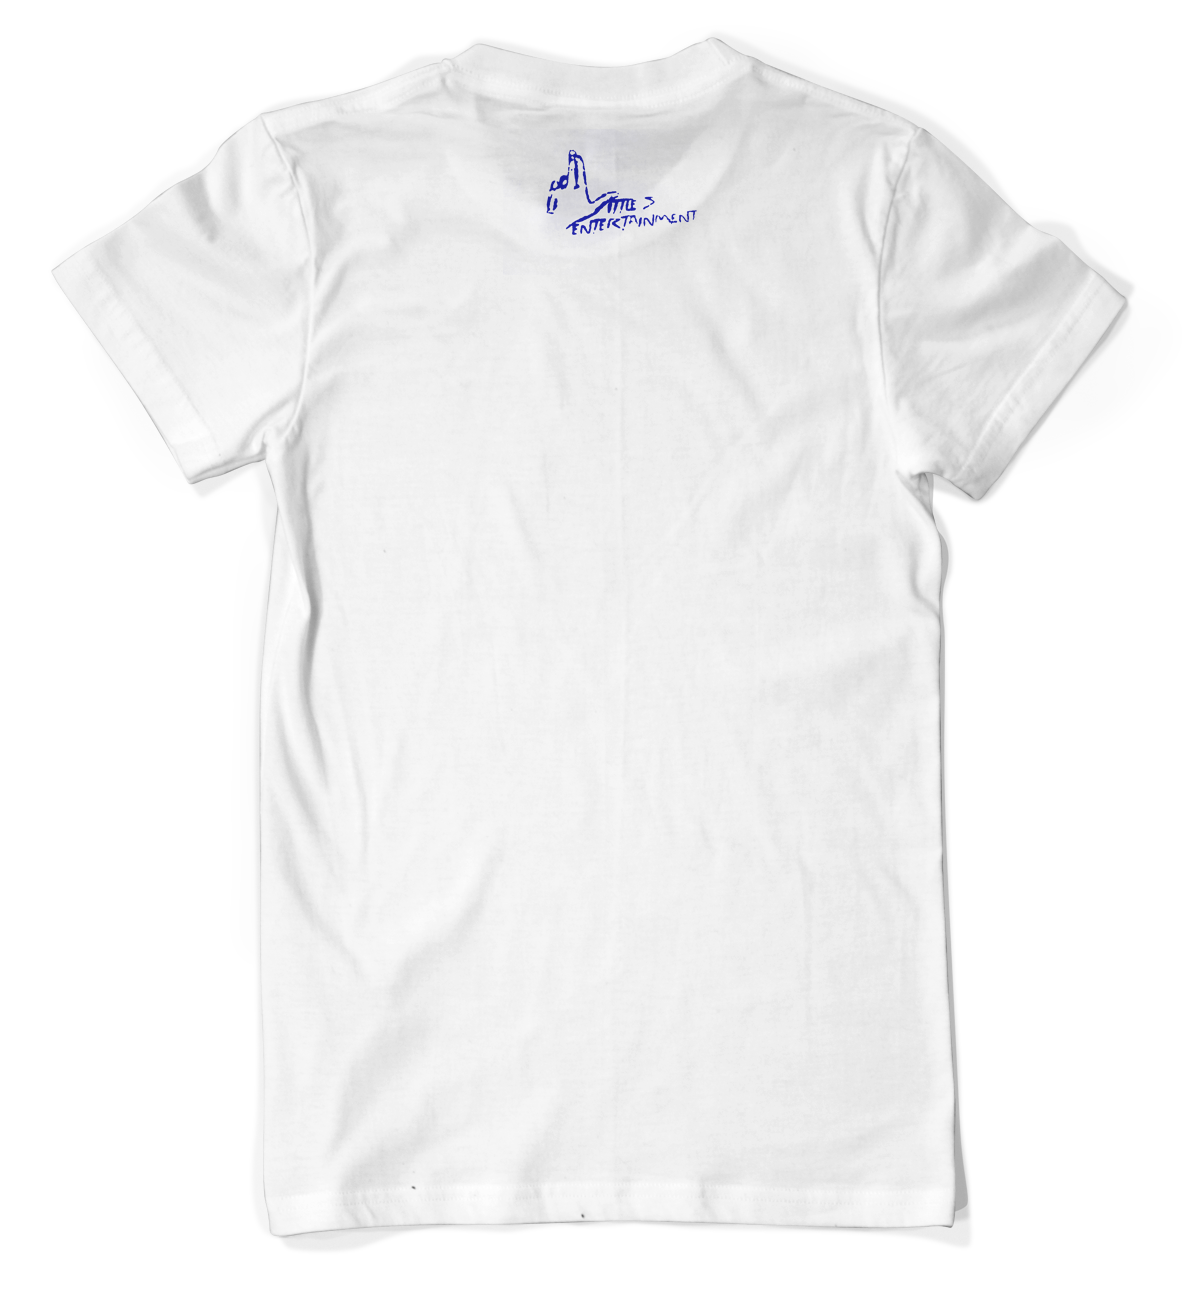 Tay Way - White / Blue T-Shirt